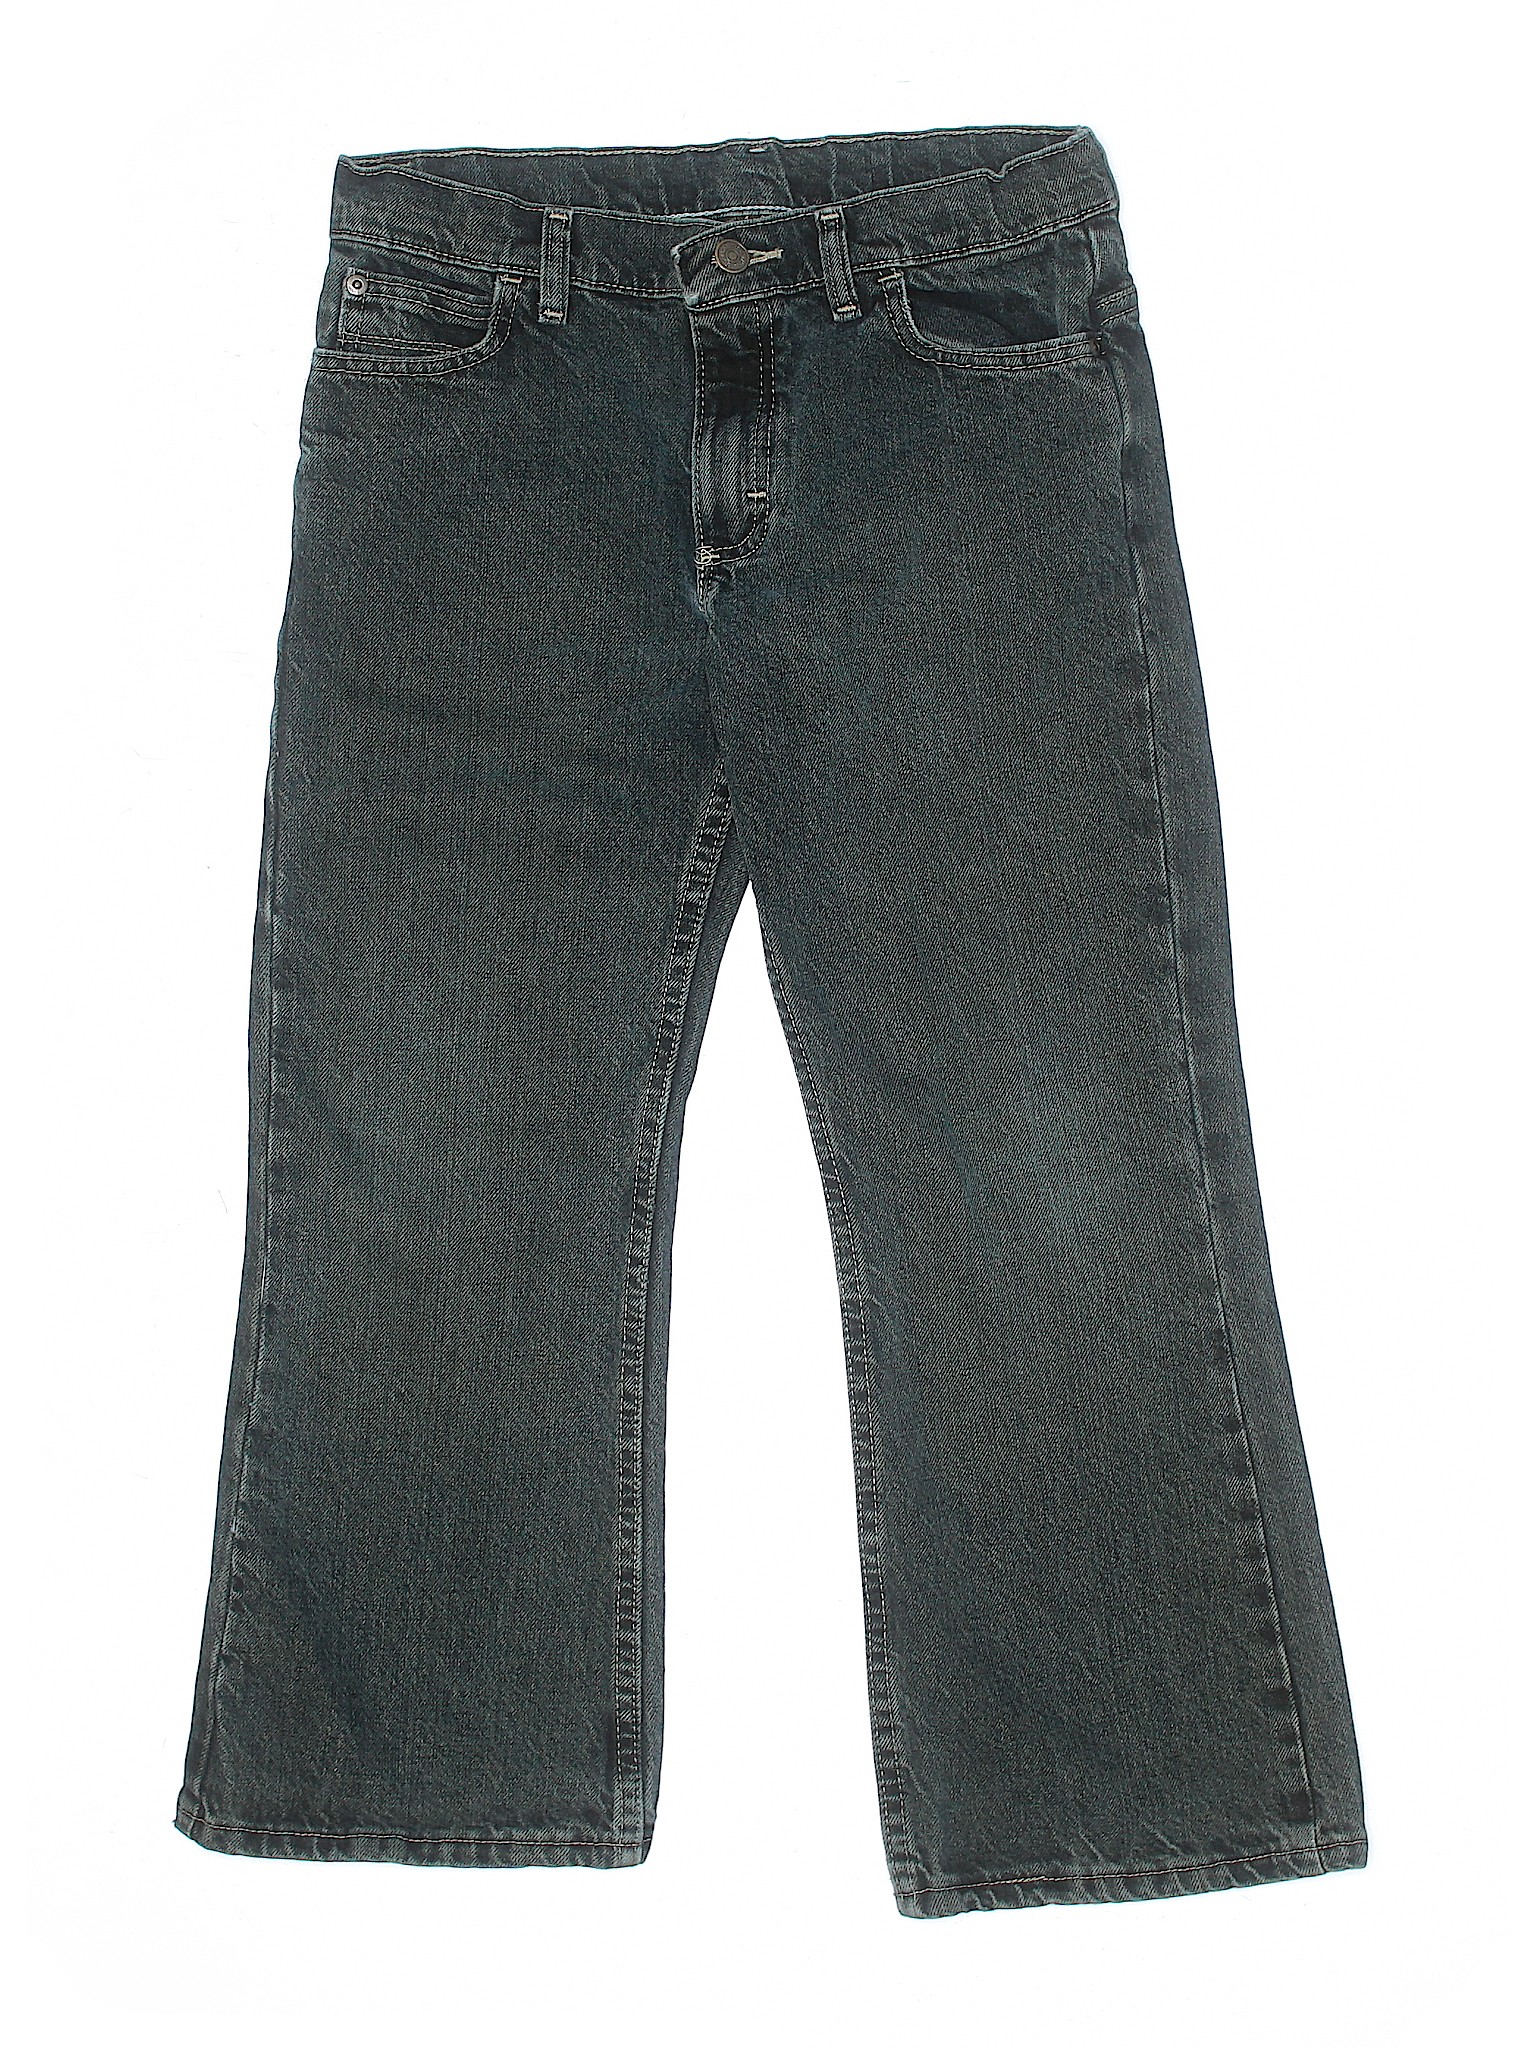 Wrangler Jeans Co Boys Blue Jeans 10 Husky | eBay